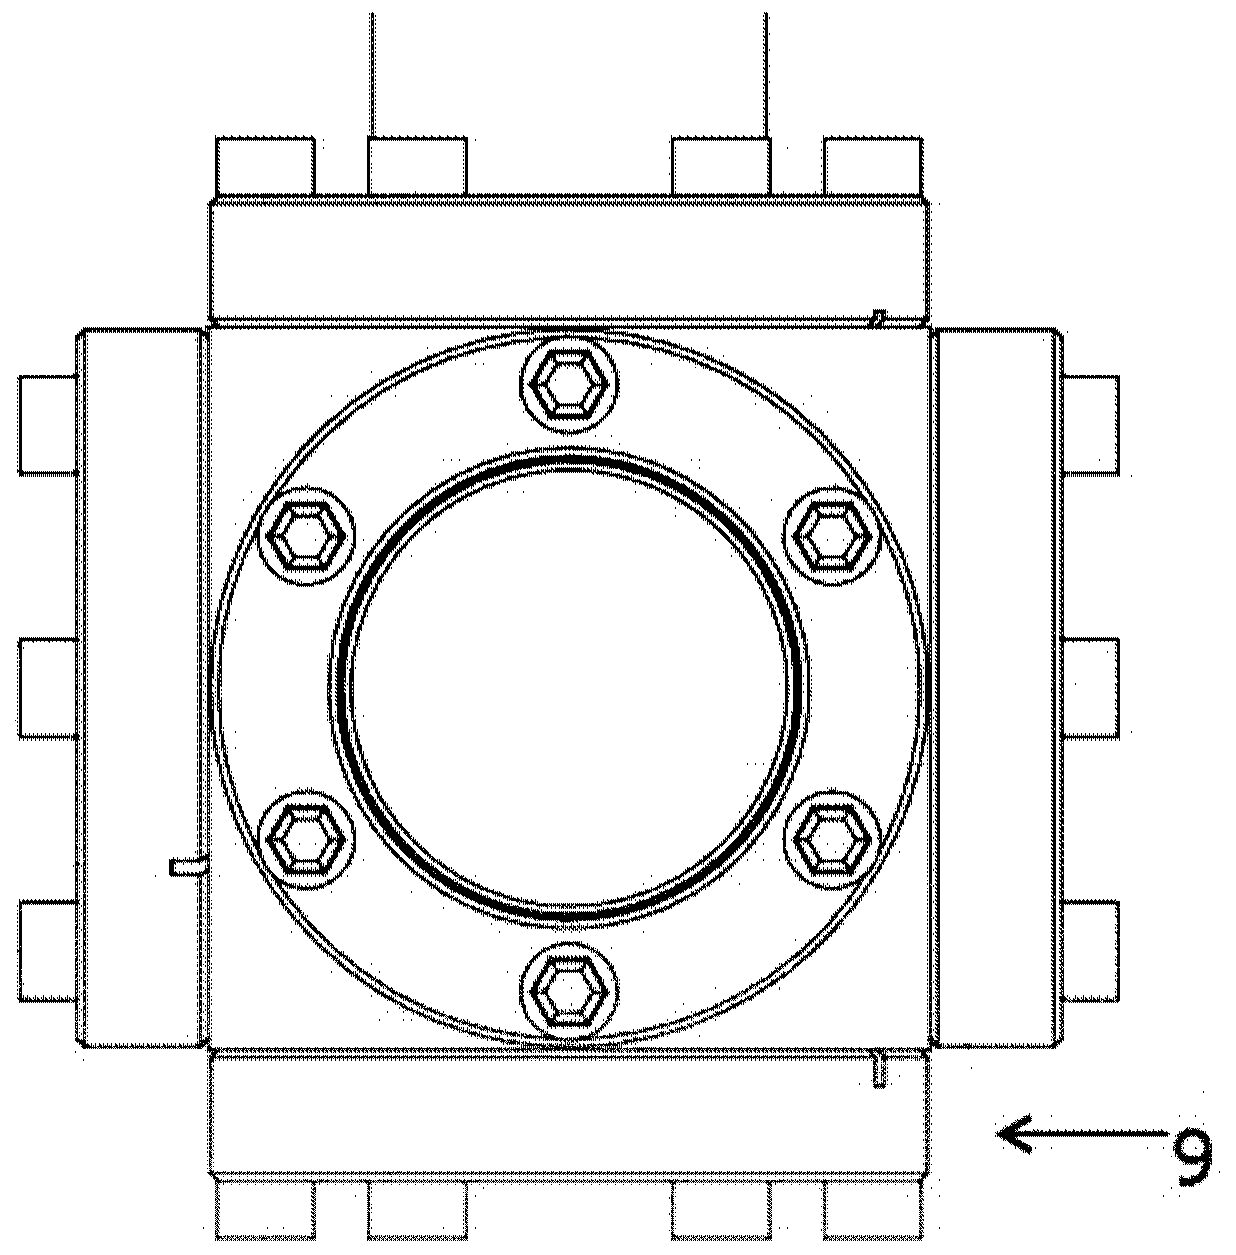 A Vacuum Structure Suitable for Miniaturized Atom Interferometer